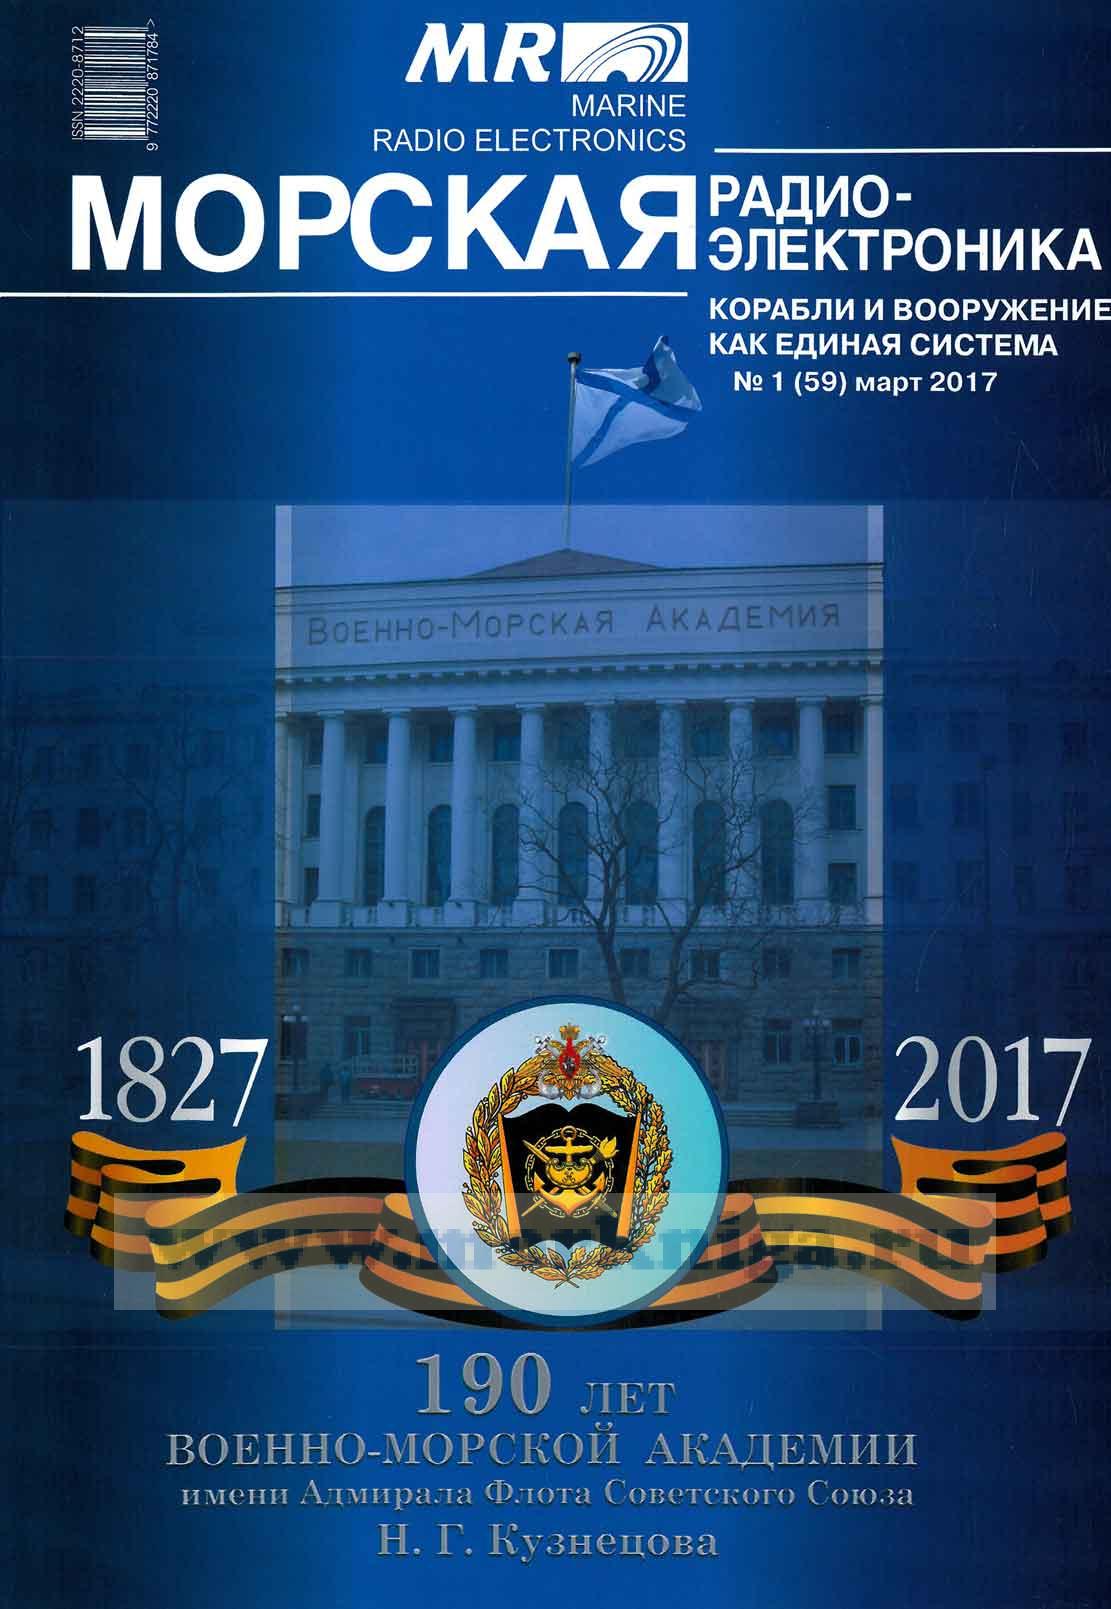 Журнал "Морская радиоэлектроника" №1 (59) март 2017